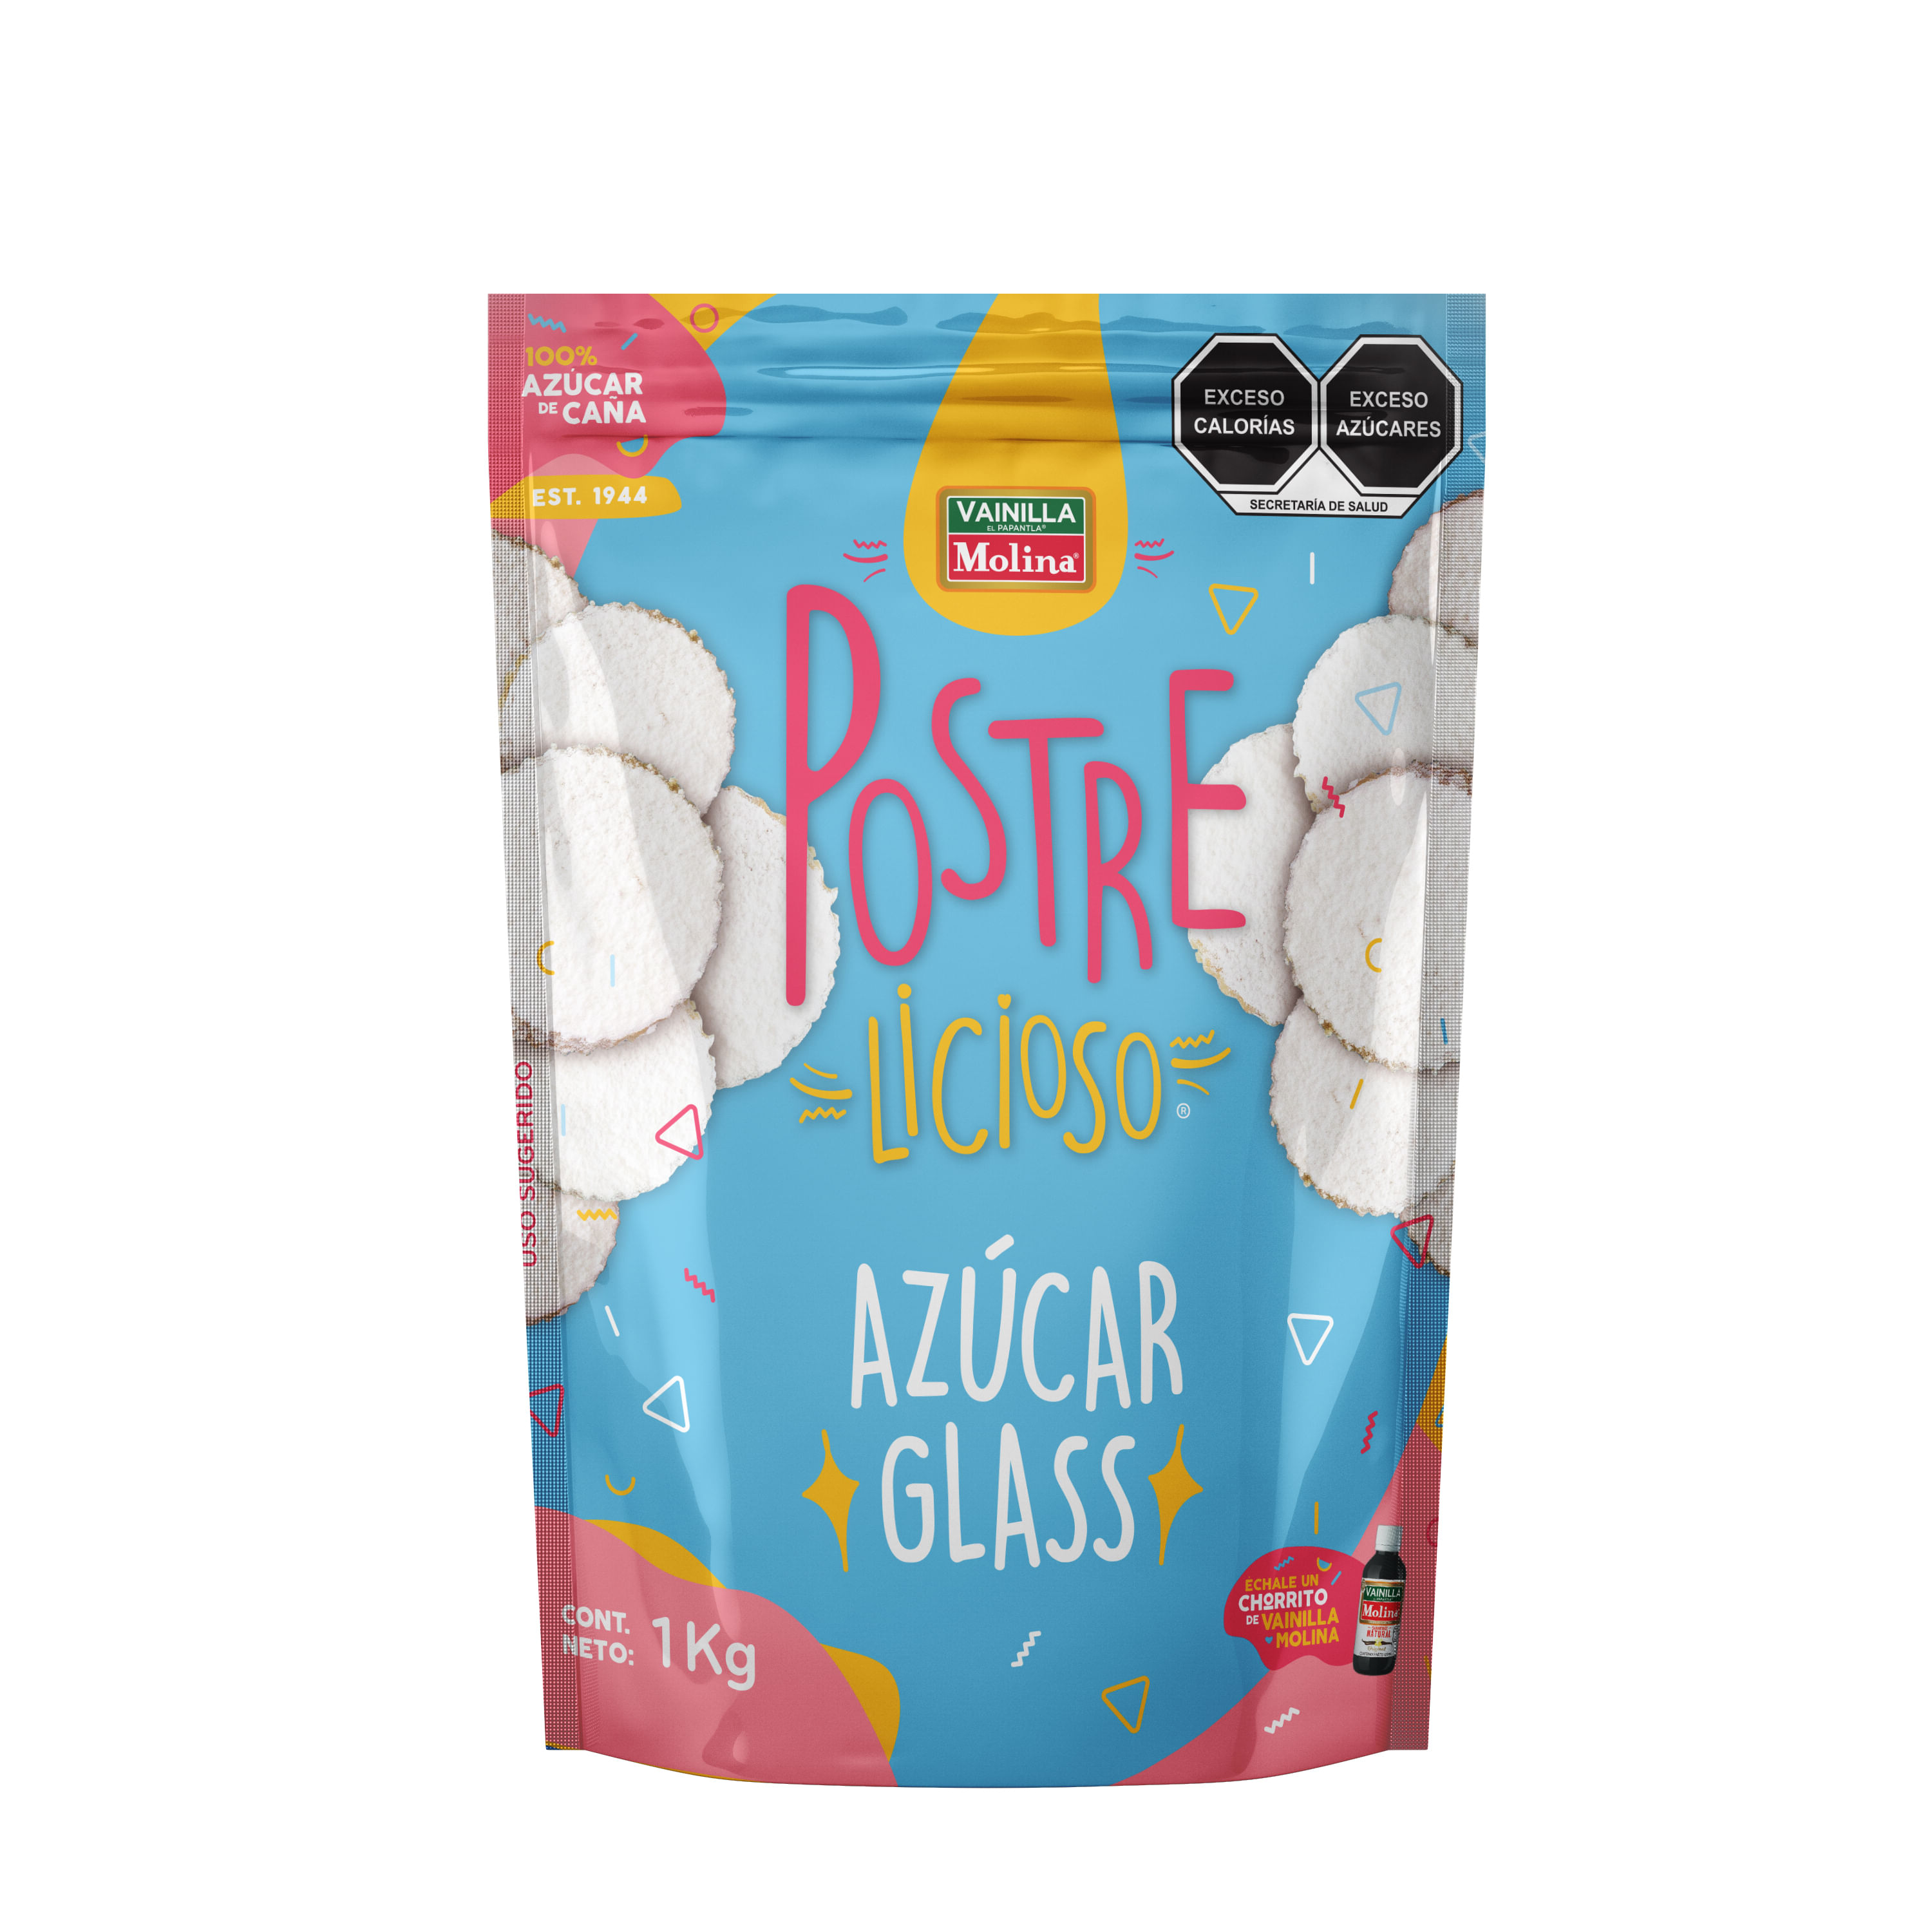 Azucar Glass S/M 1.0 - Kg